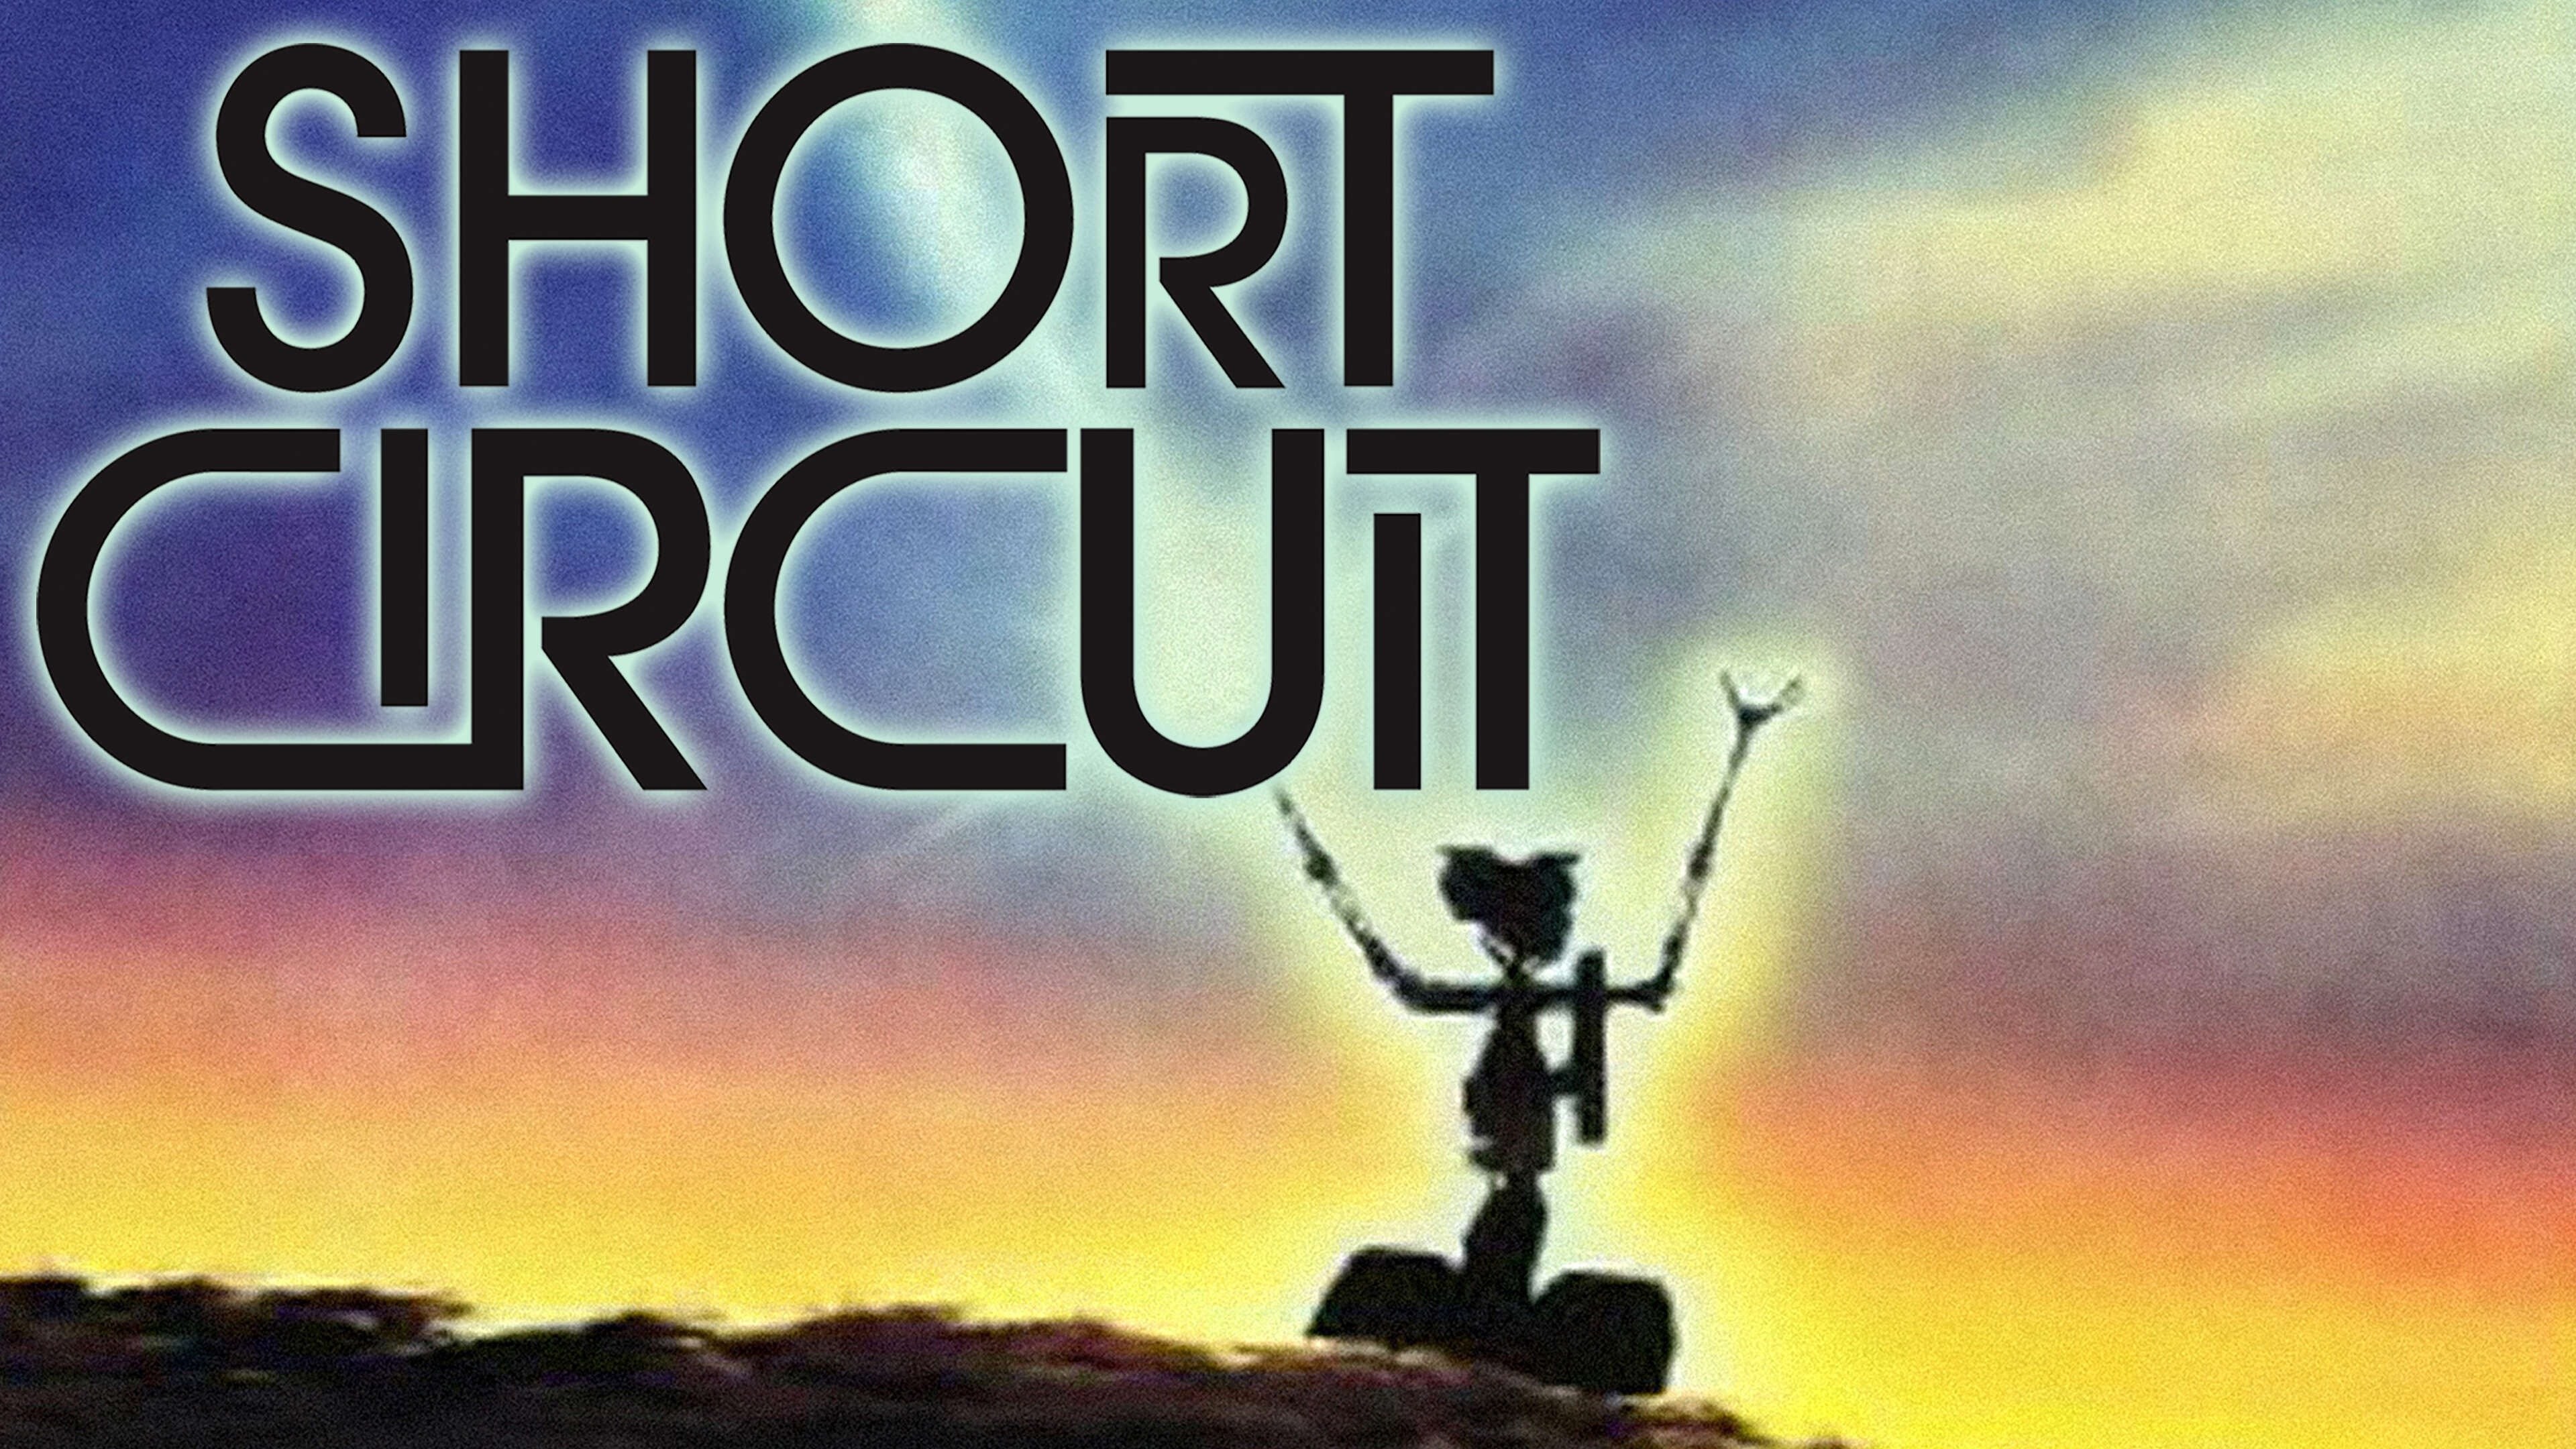 Short Circuit (2019 film) - Wikipedia